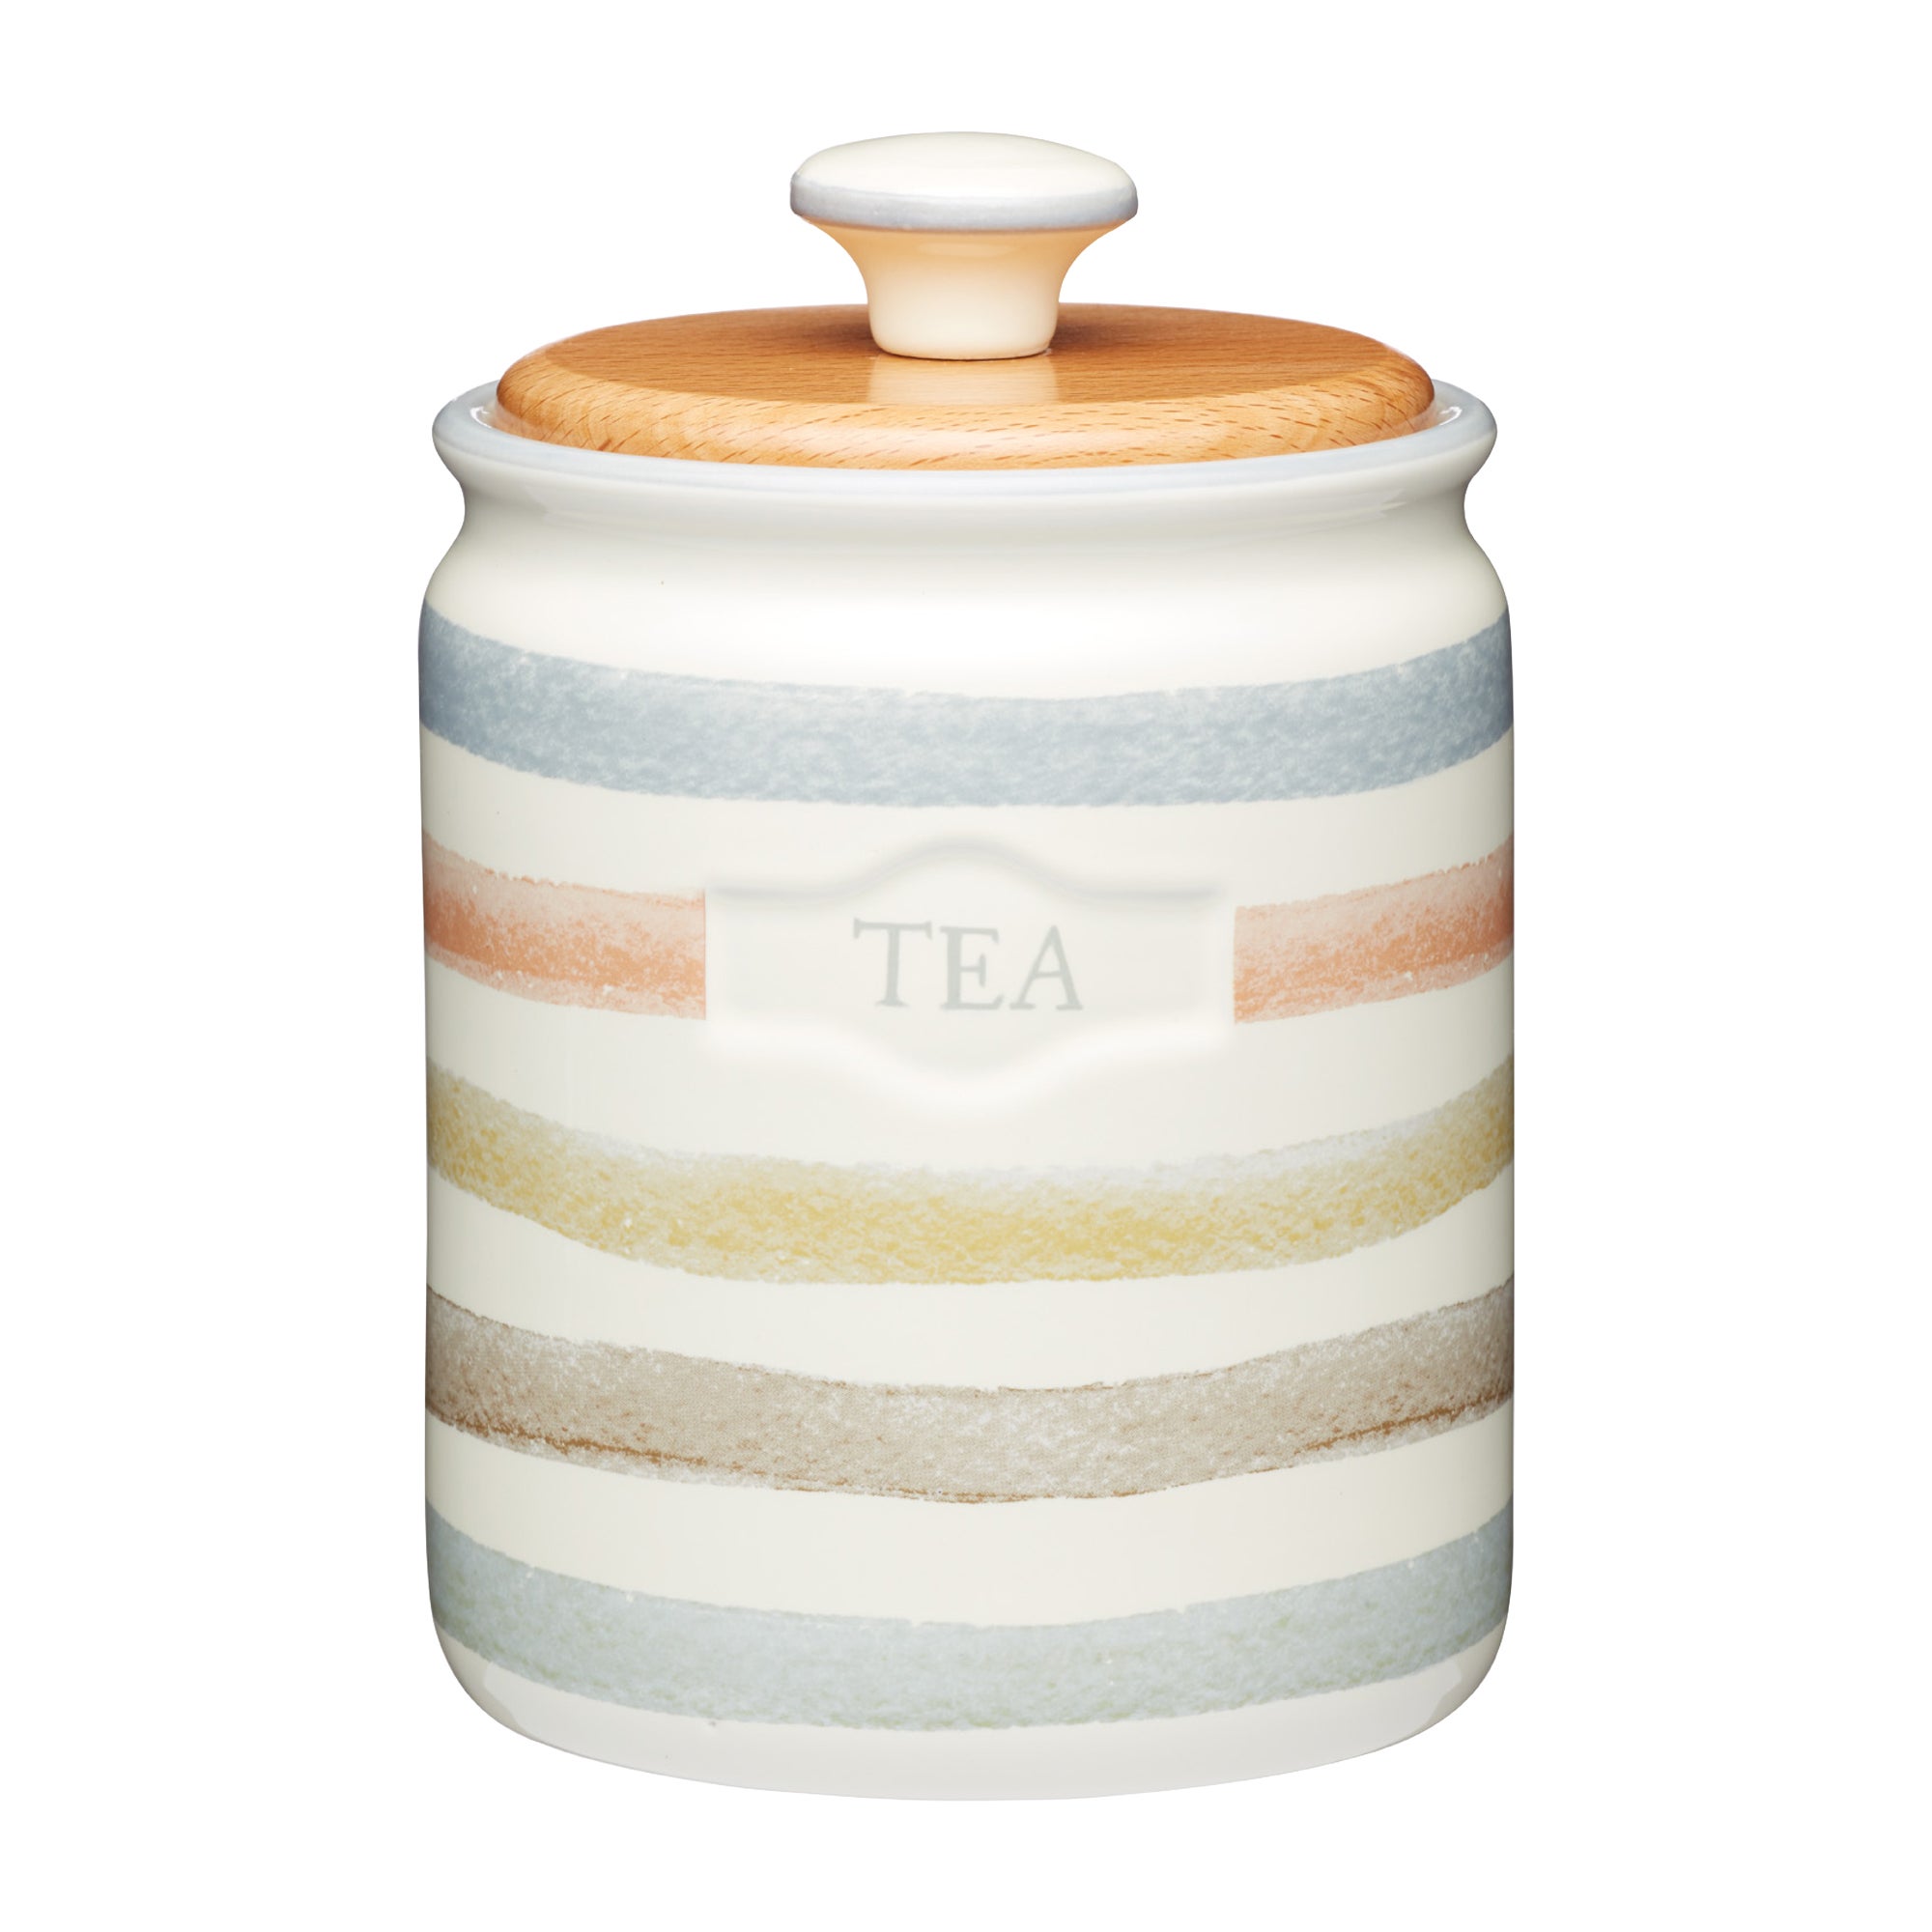 KitchenCraft Ceramic Tea Canister